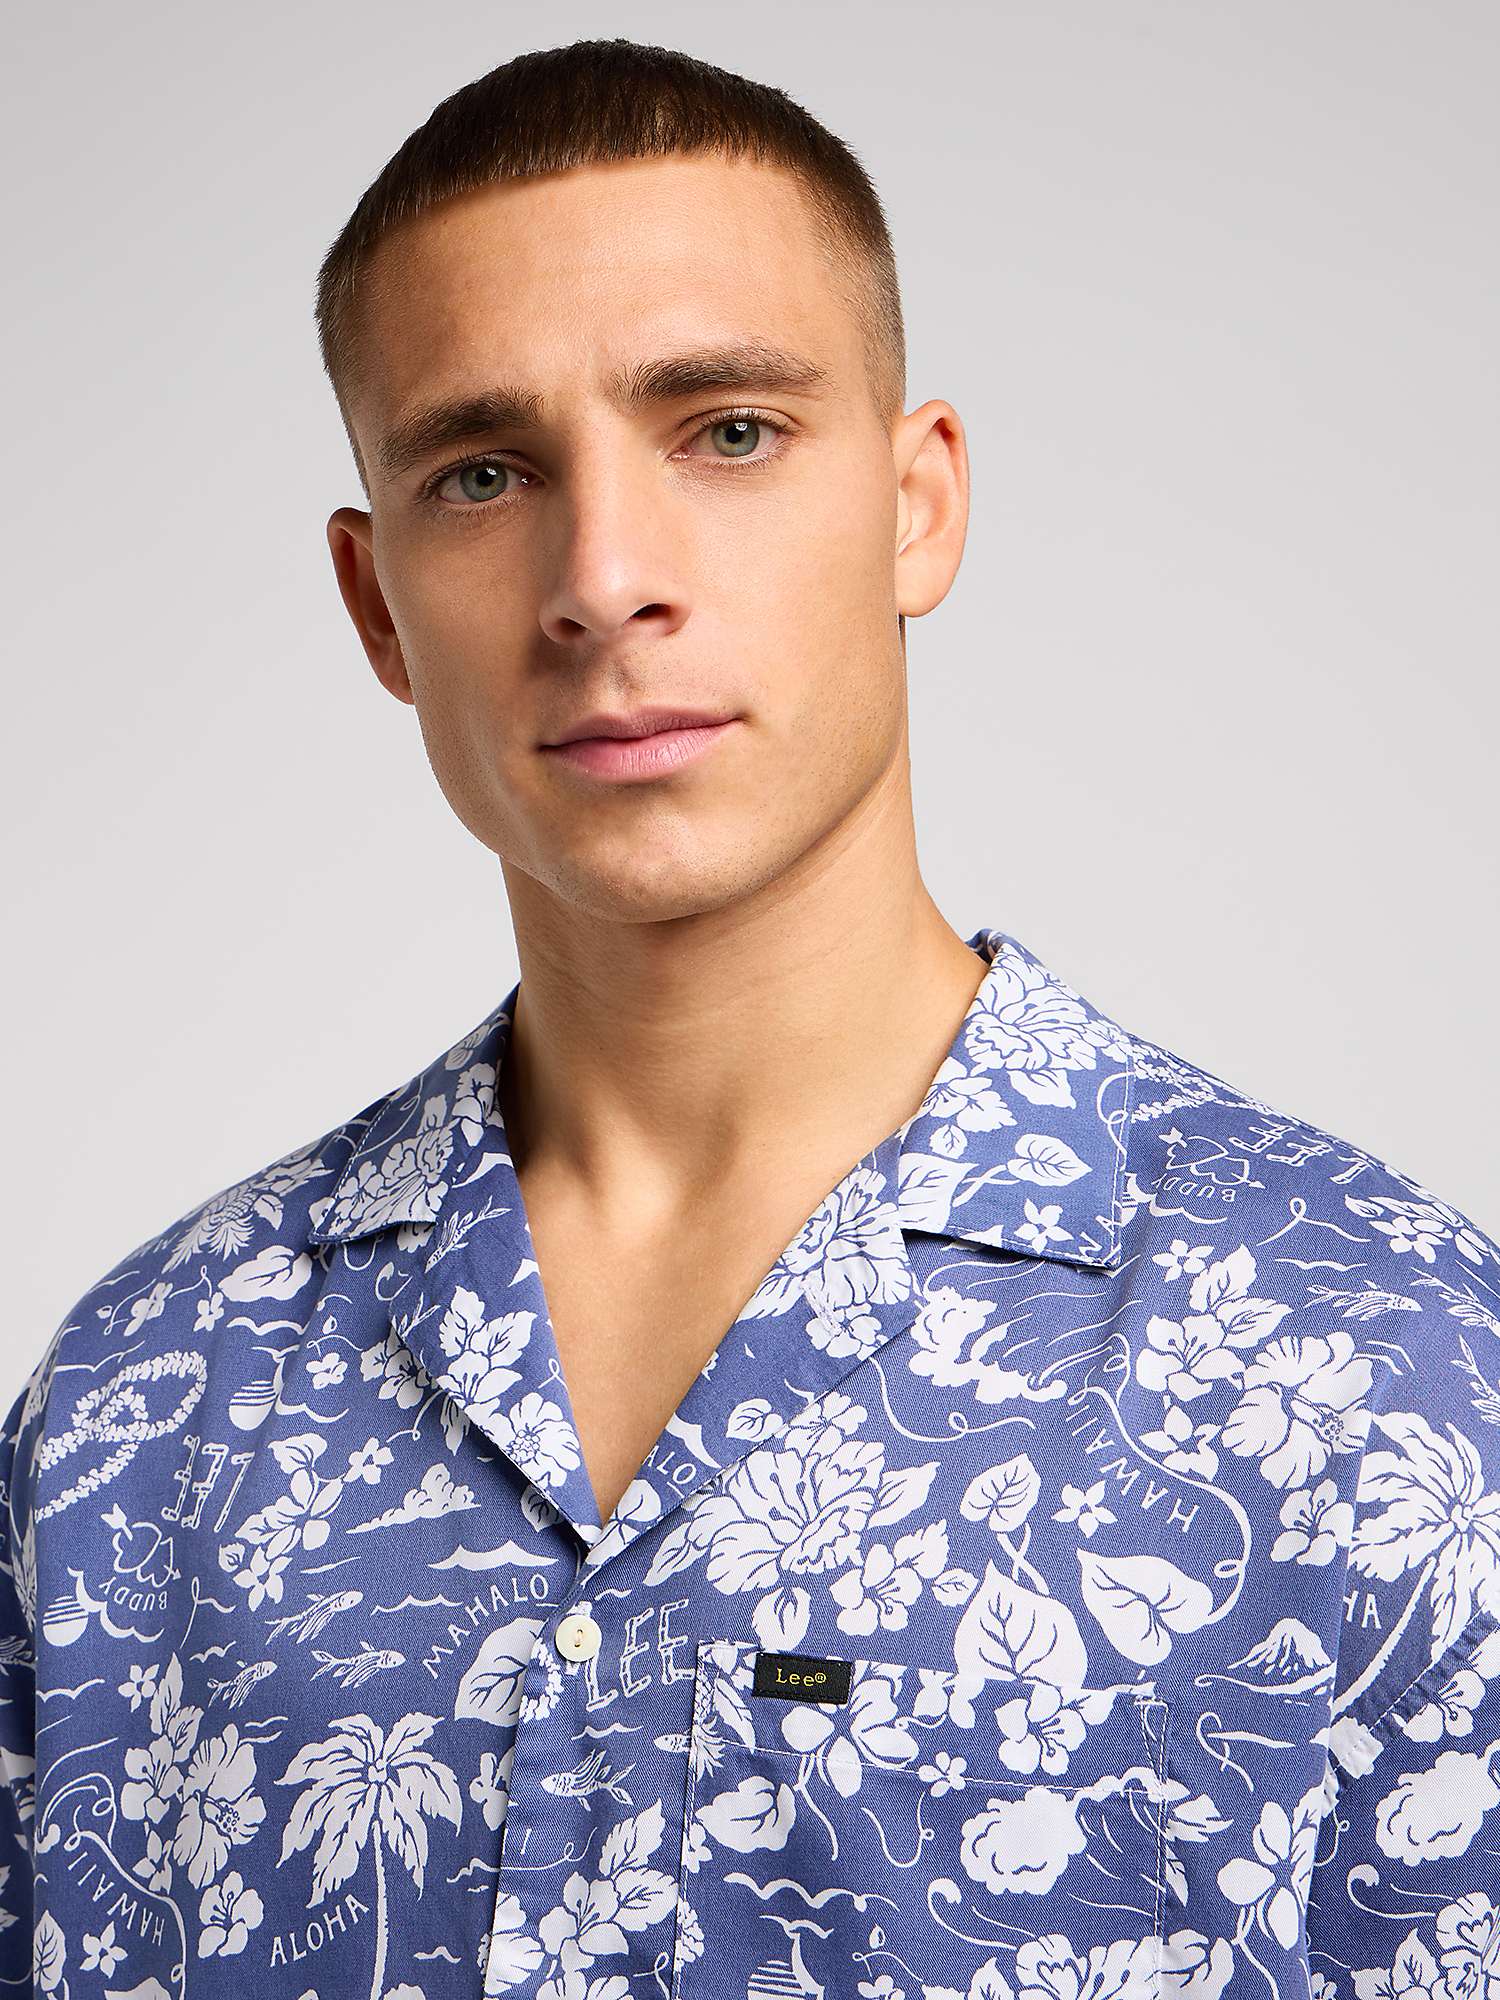 Buy Lee Loose Fit Resort Style Shirt, Blue/White Online at johnlewis.com